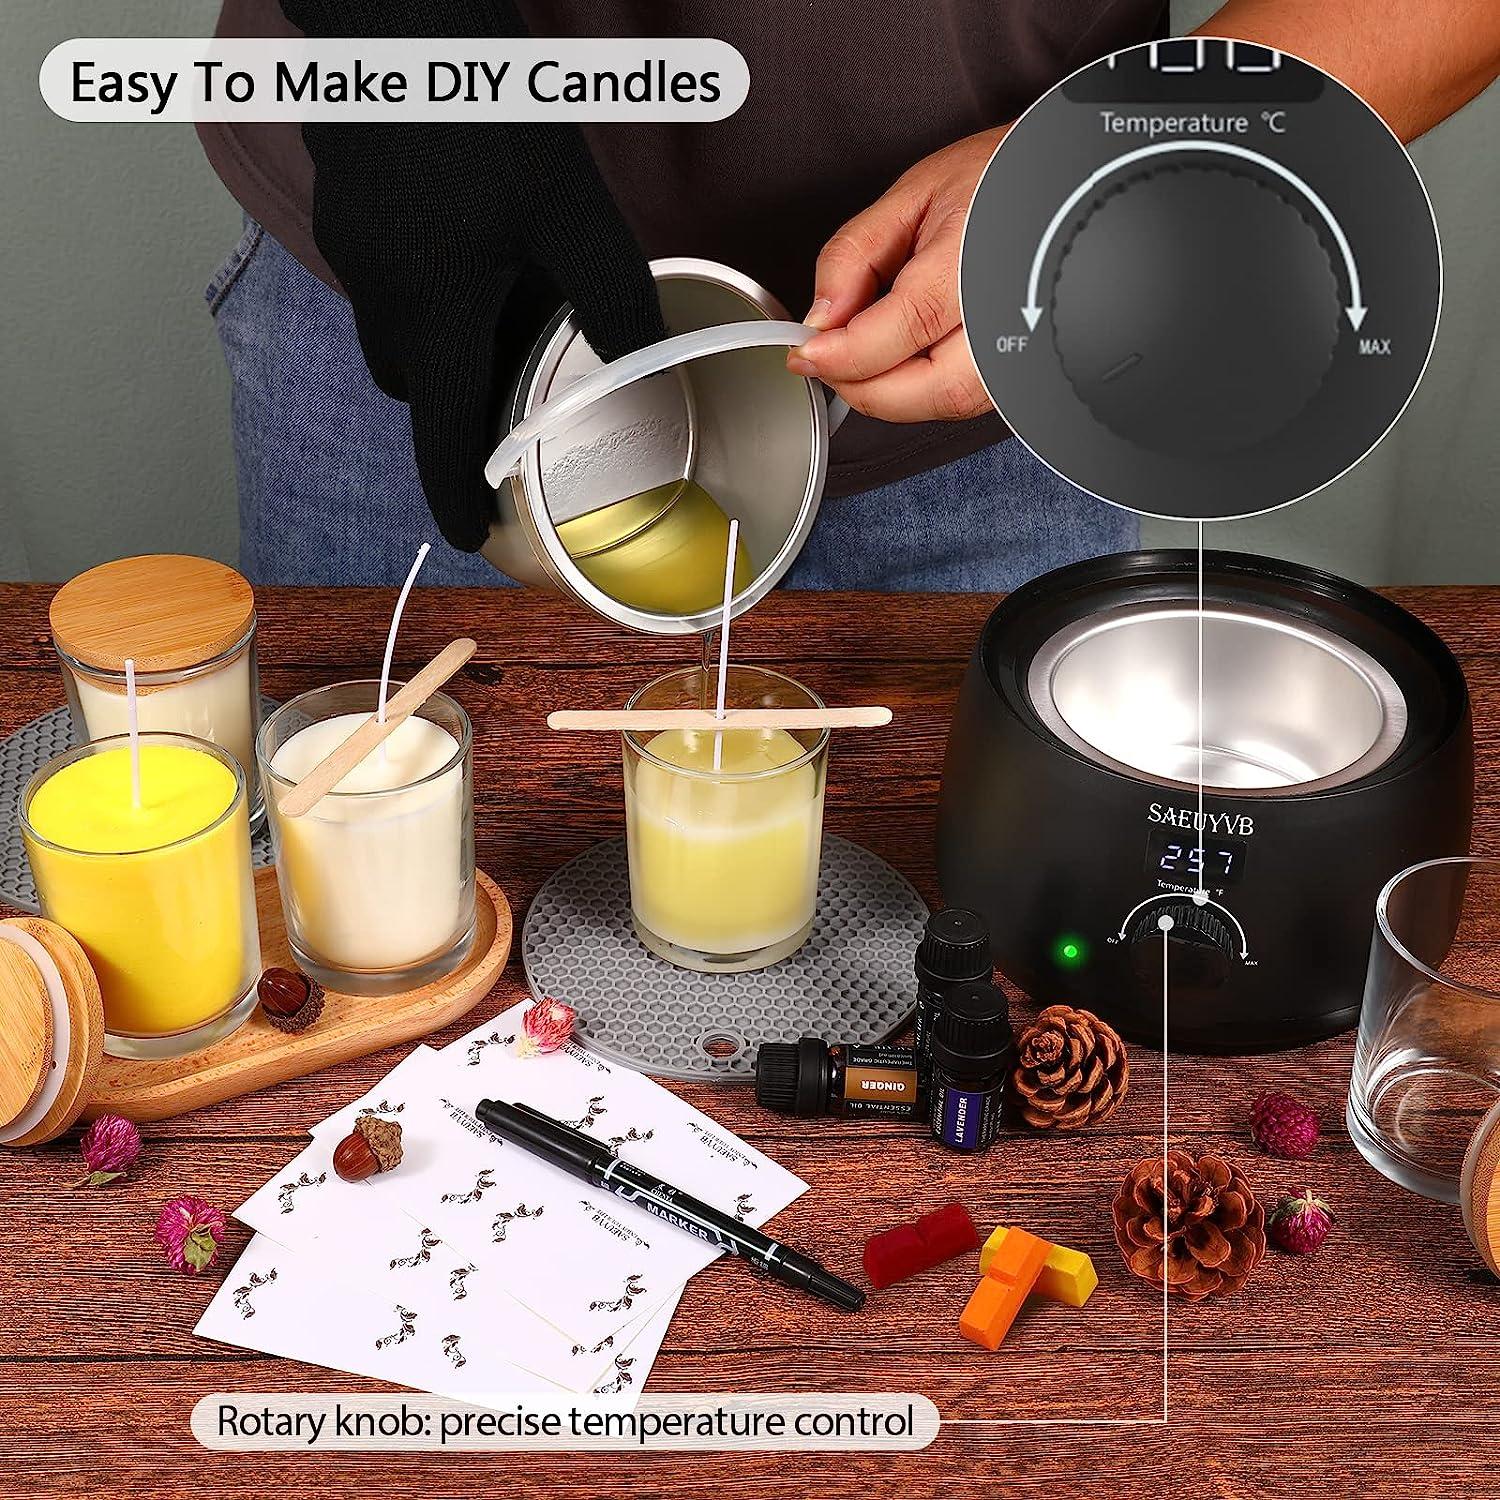 Candle Making Wax Melting Digital Thermometer Wax Melting LCD Display 300C  752F